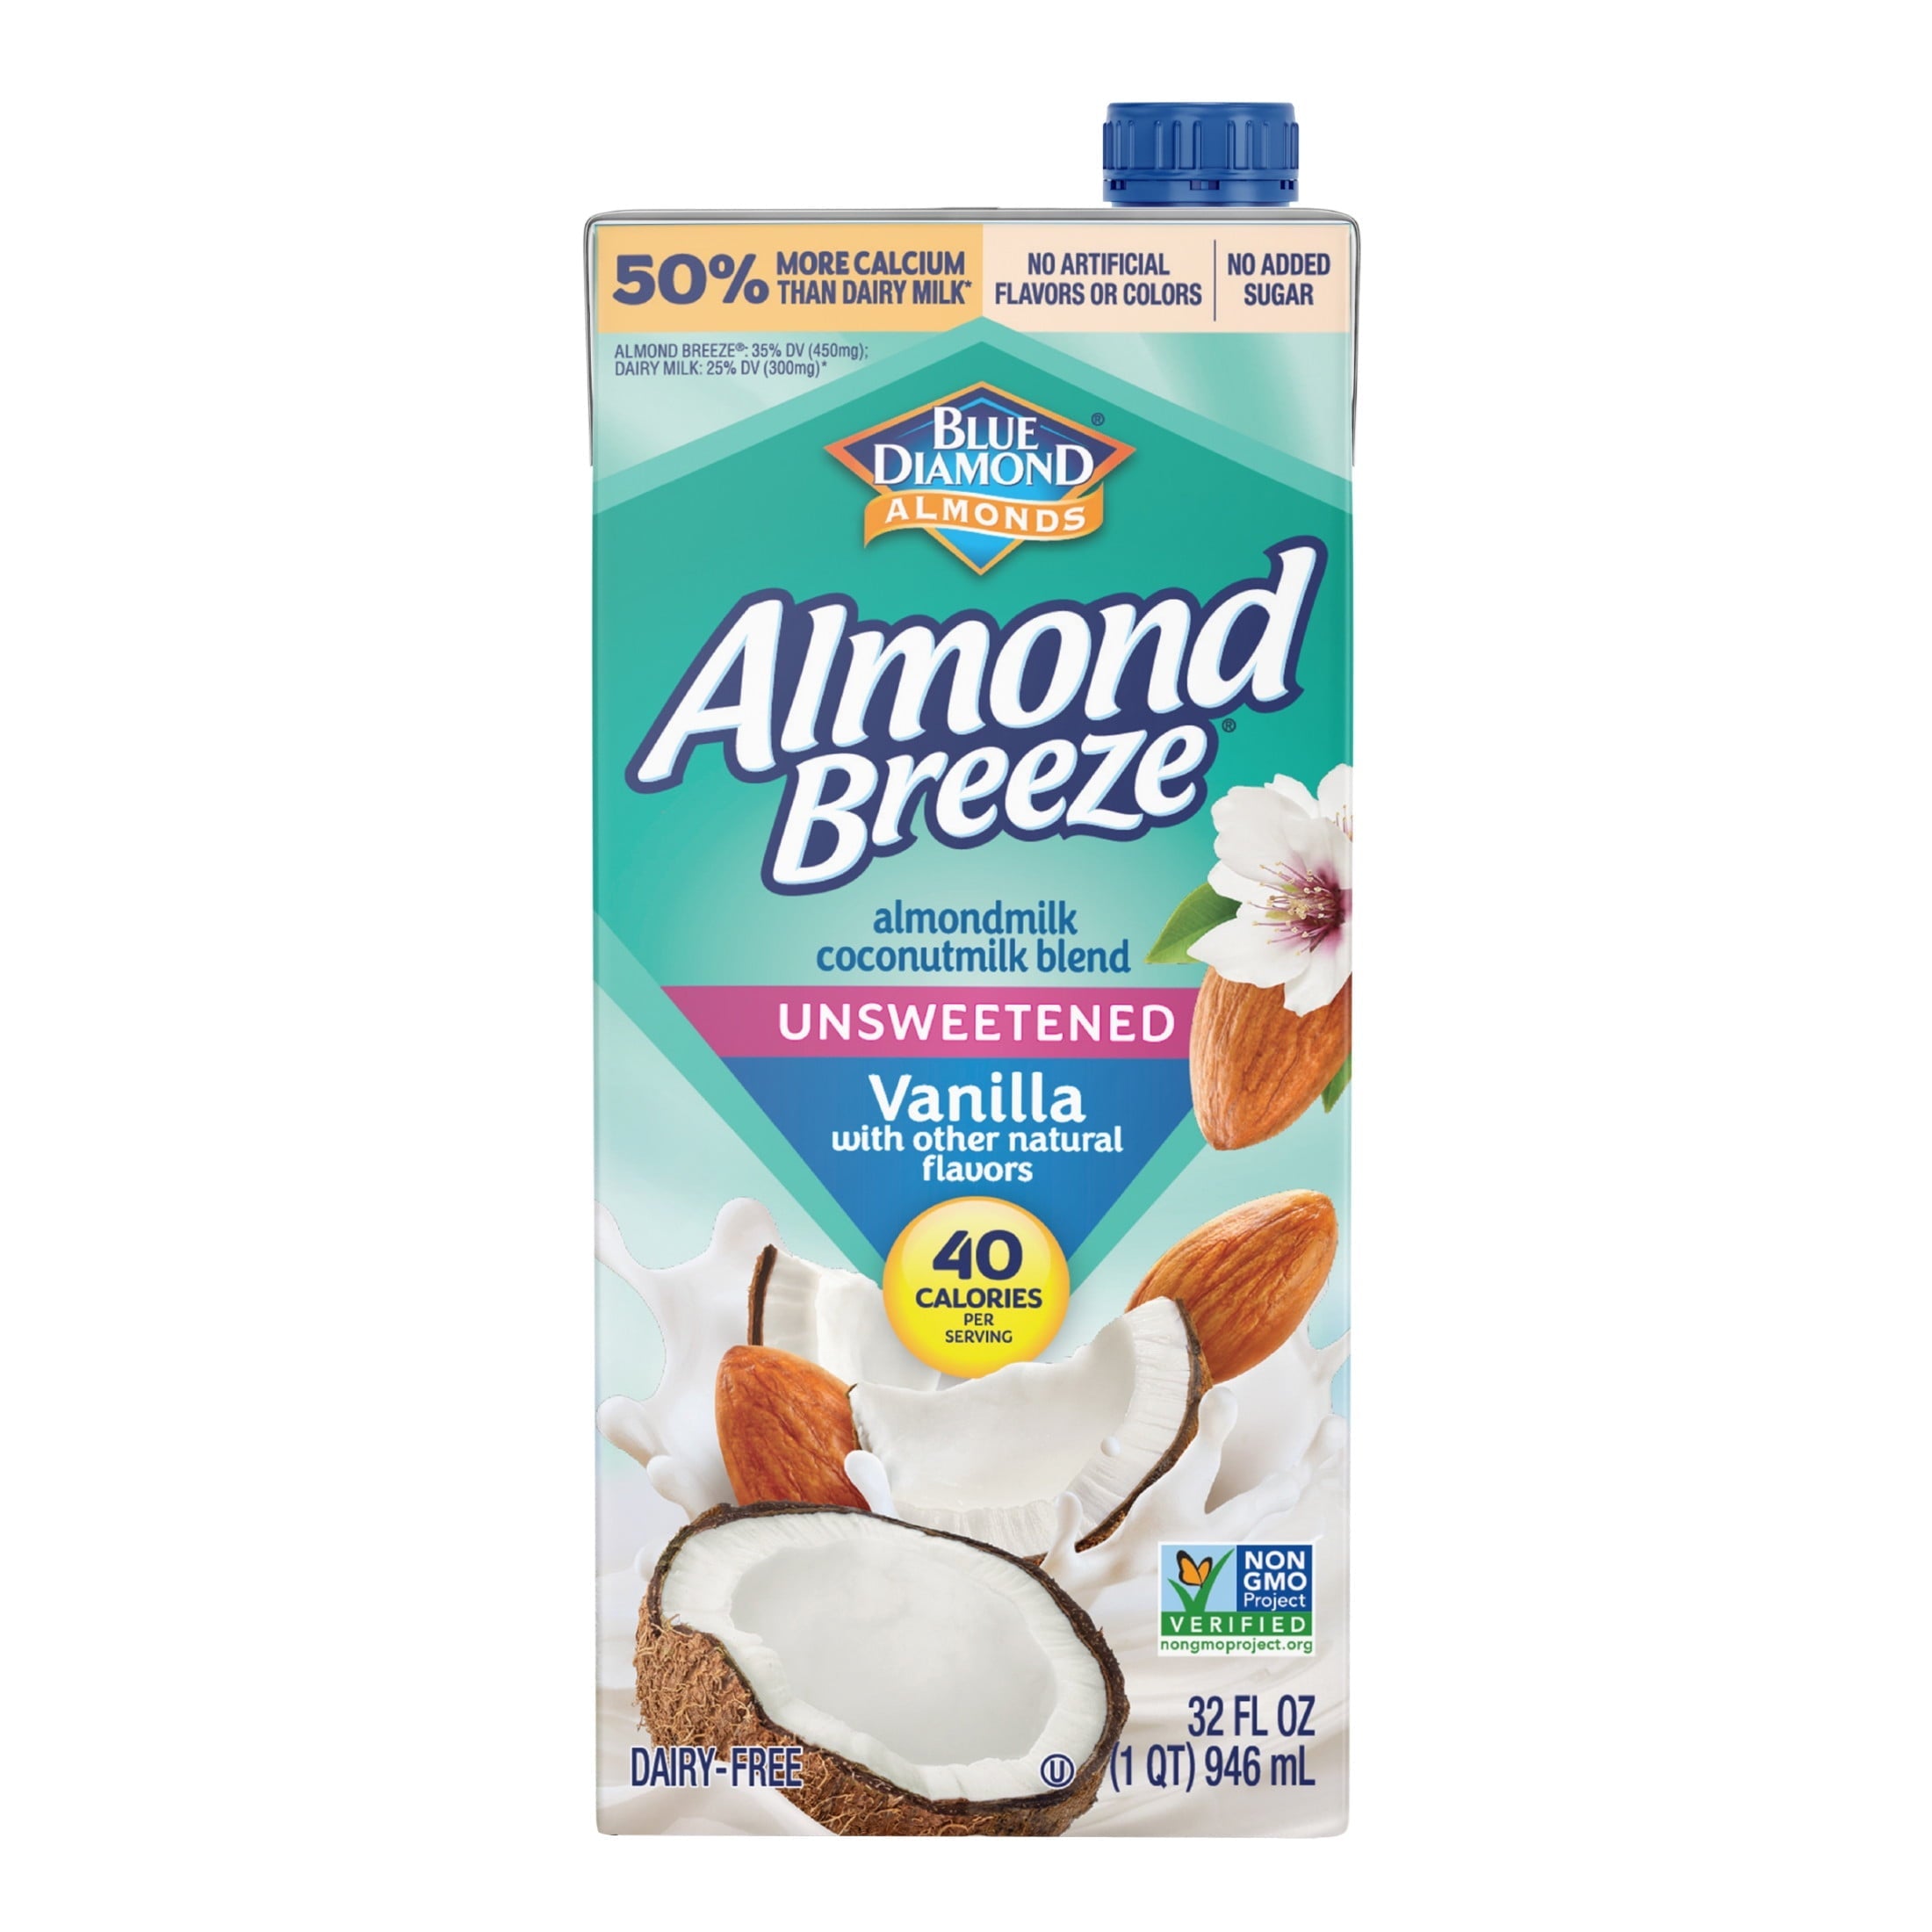 Blue Diamond Almond Breeze Almondmilk/Coconutmilk Blended 32 oz Carton